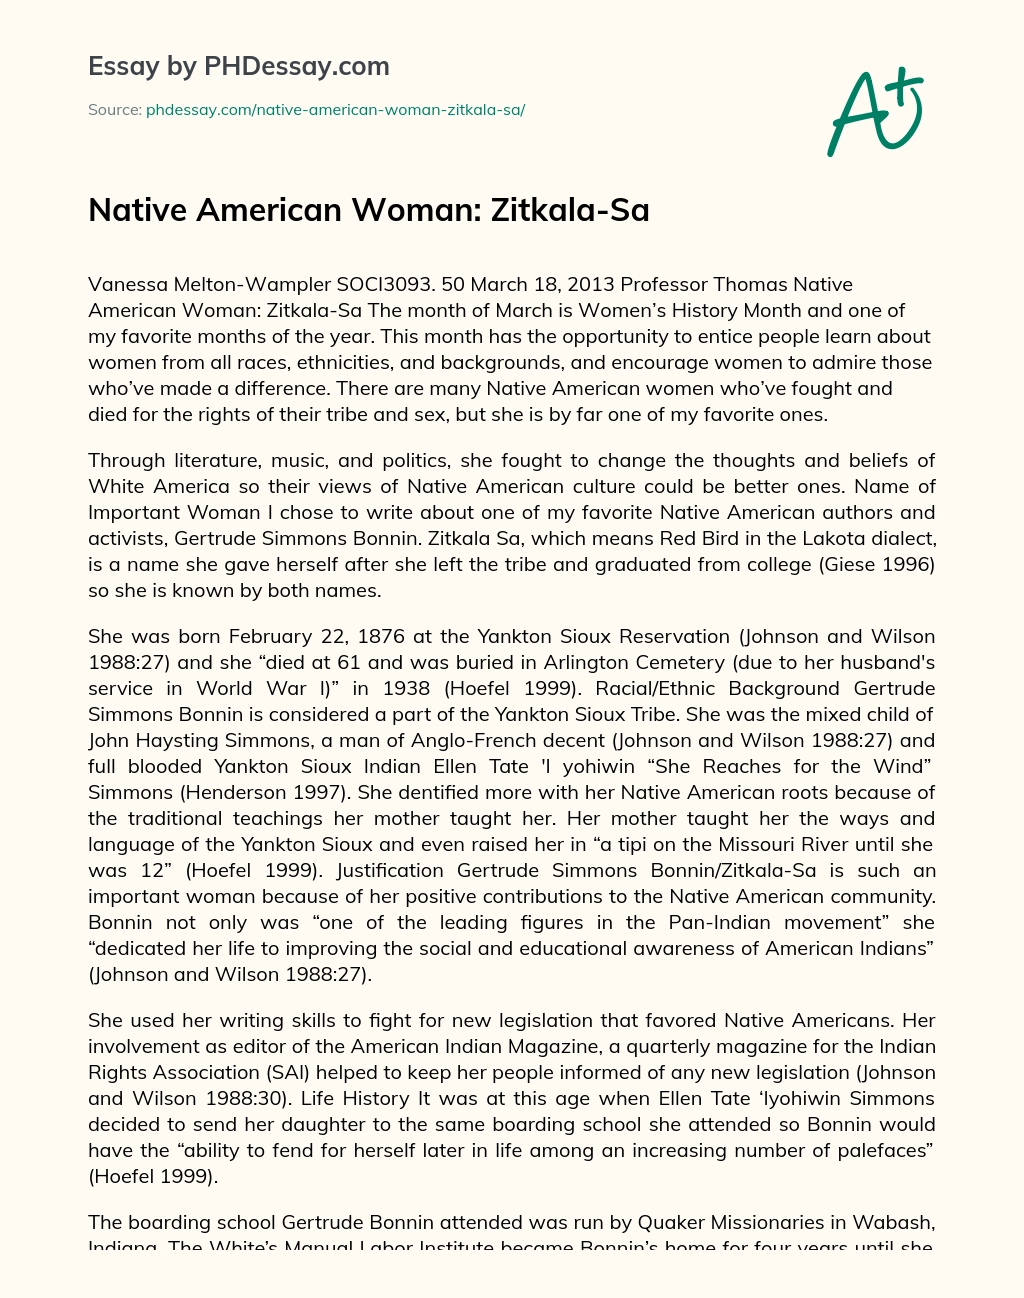 Native American Woman: Zitkala-Sa essay